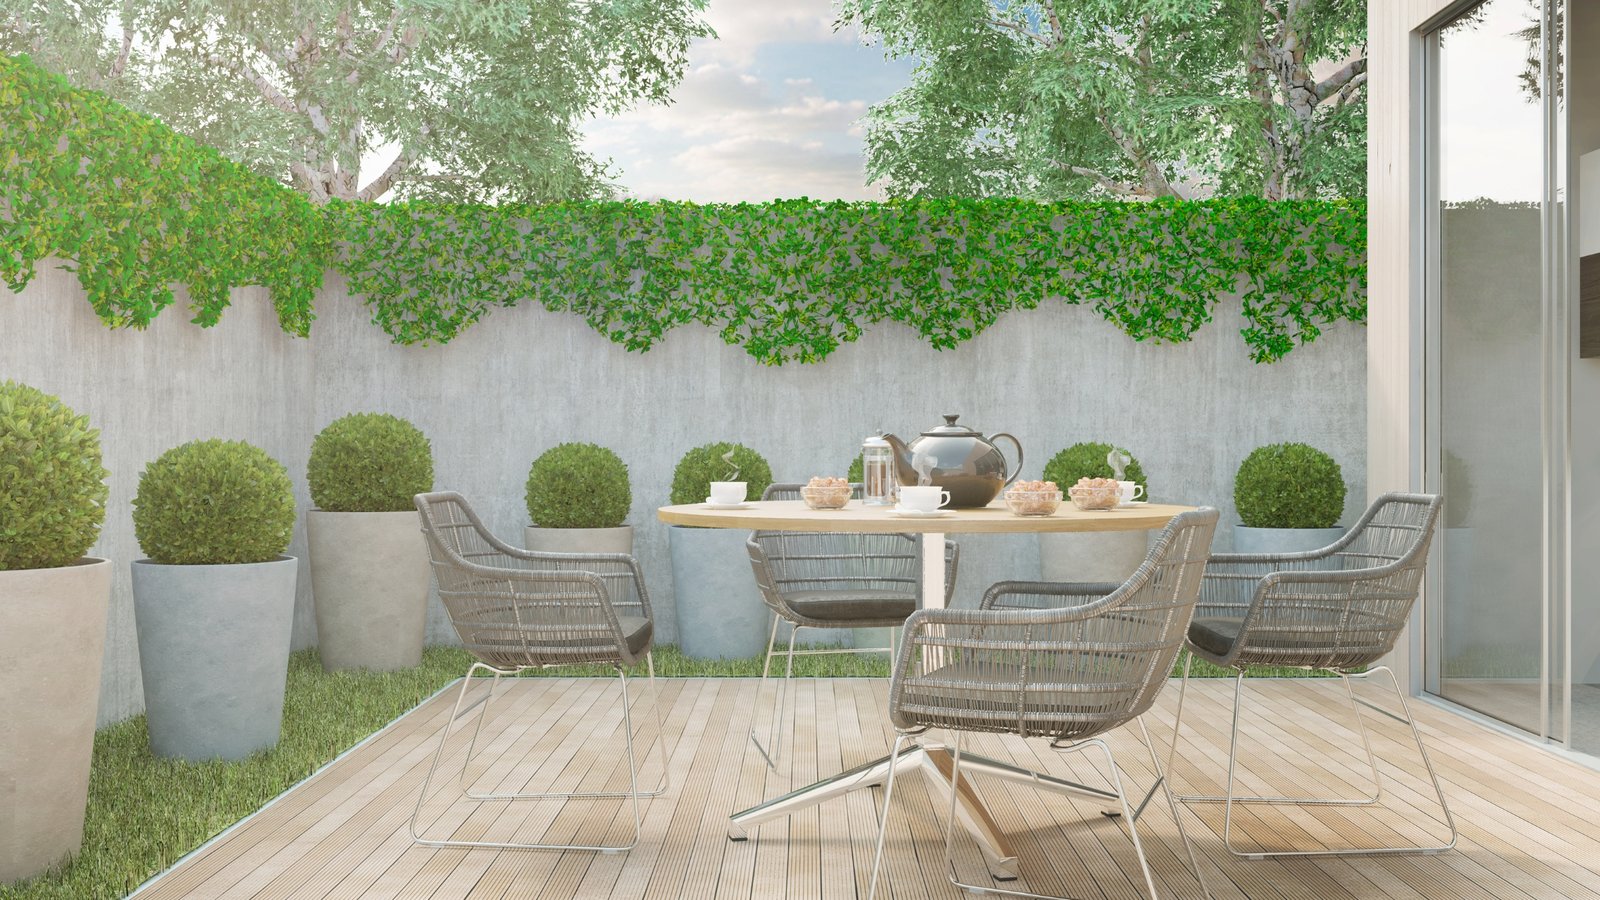 Transform An Ordinary Backyard Into An Expensive-Looking Oasis